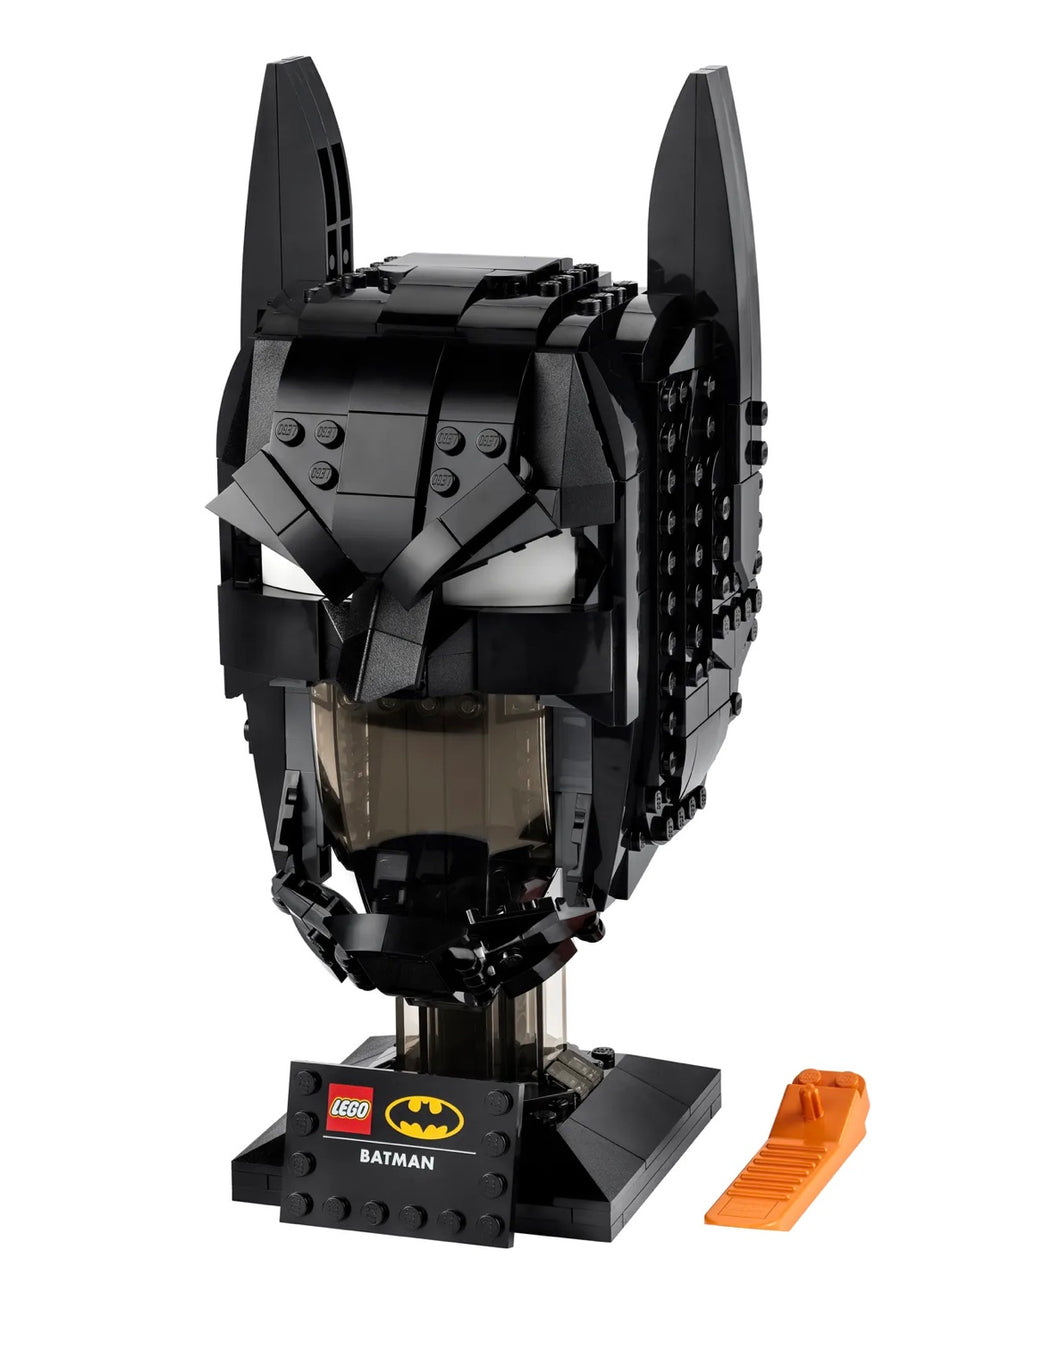 LEGO: BATMAN COWL 76182